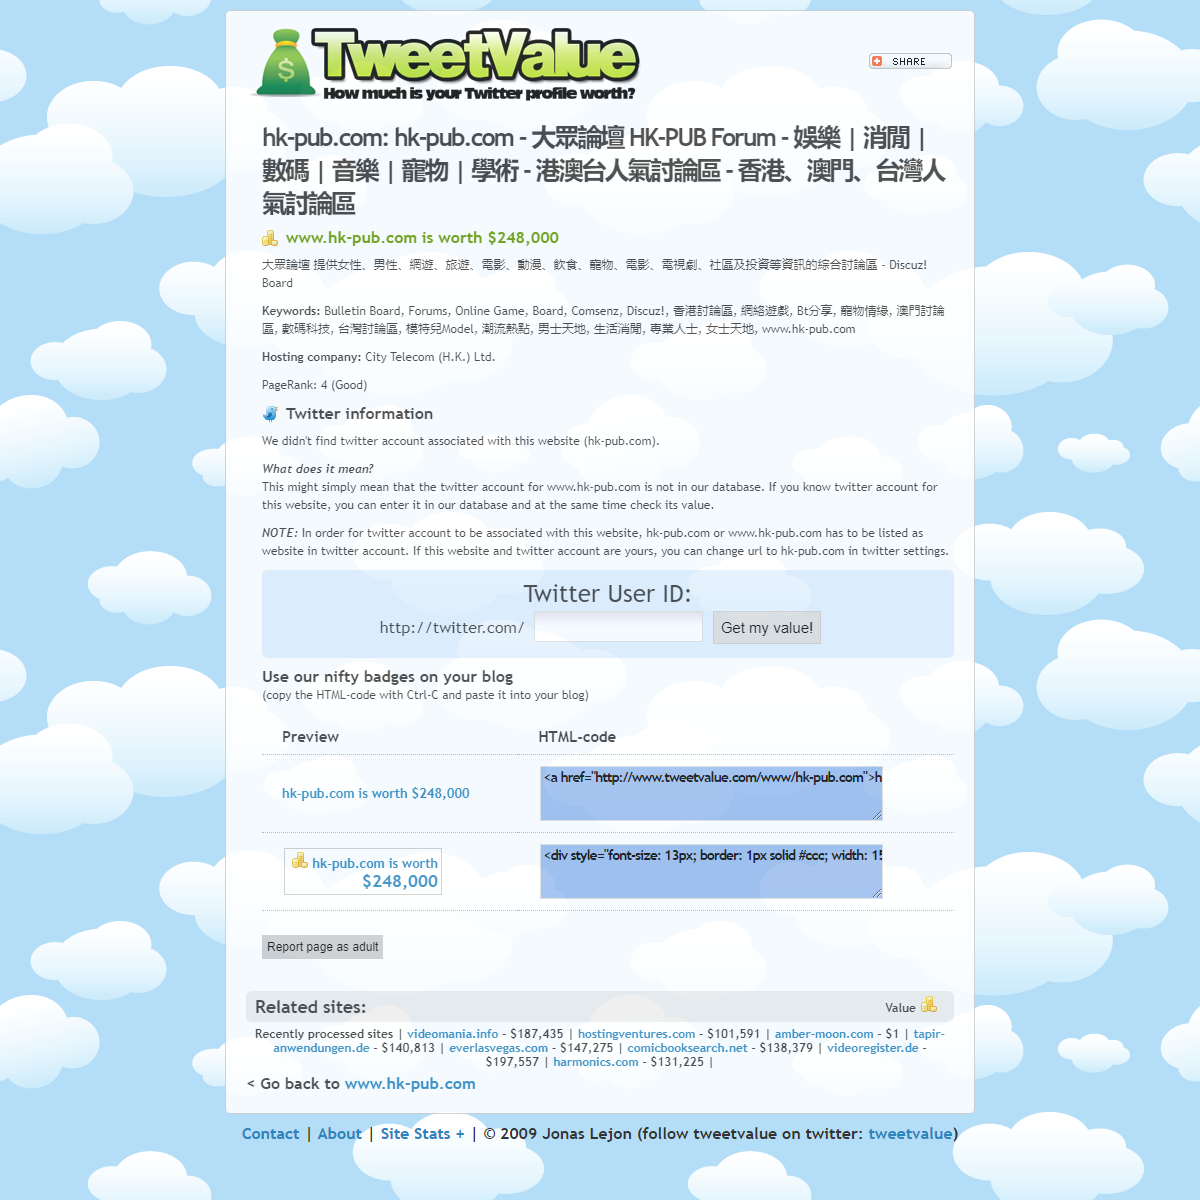 A complete backup of http://tweetvalue.com/www/hk-pub.com